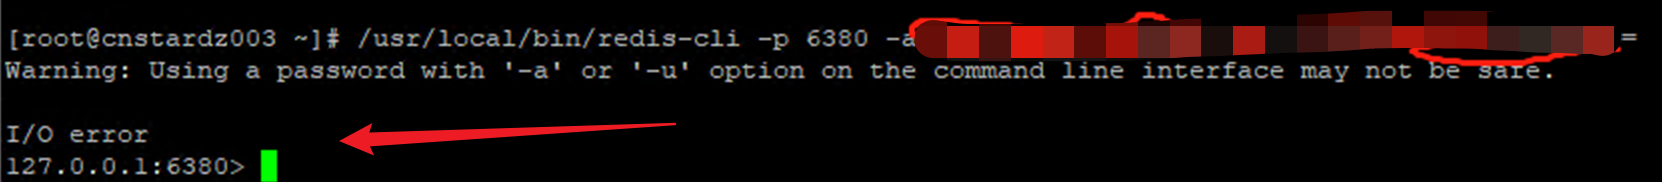 【Azure Redis】Redis-CLI连接Redis 6380端口始终遇见 I/O Error_redis